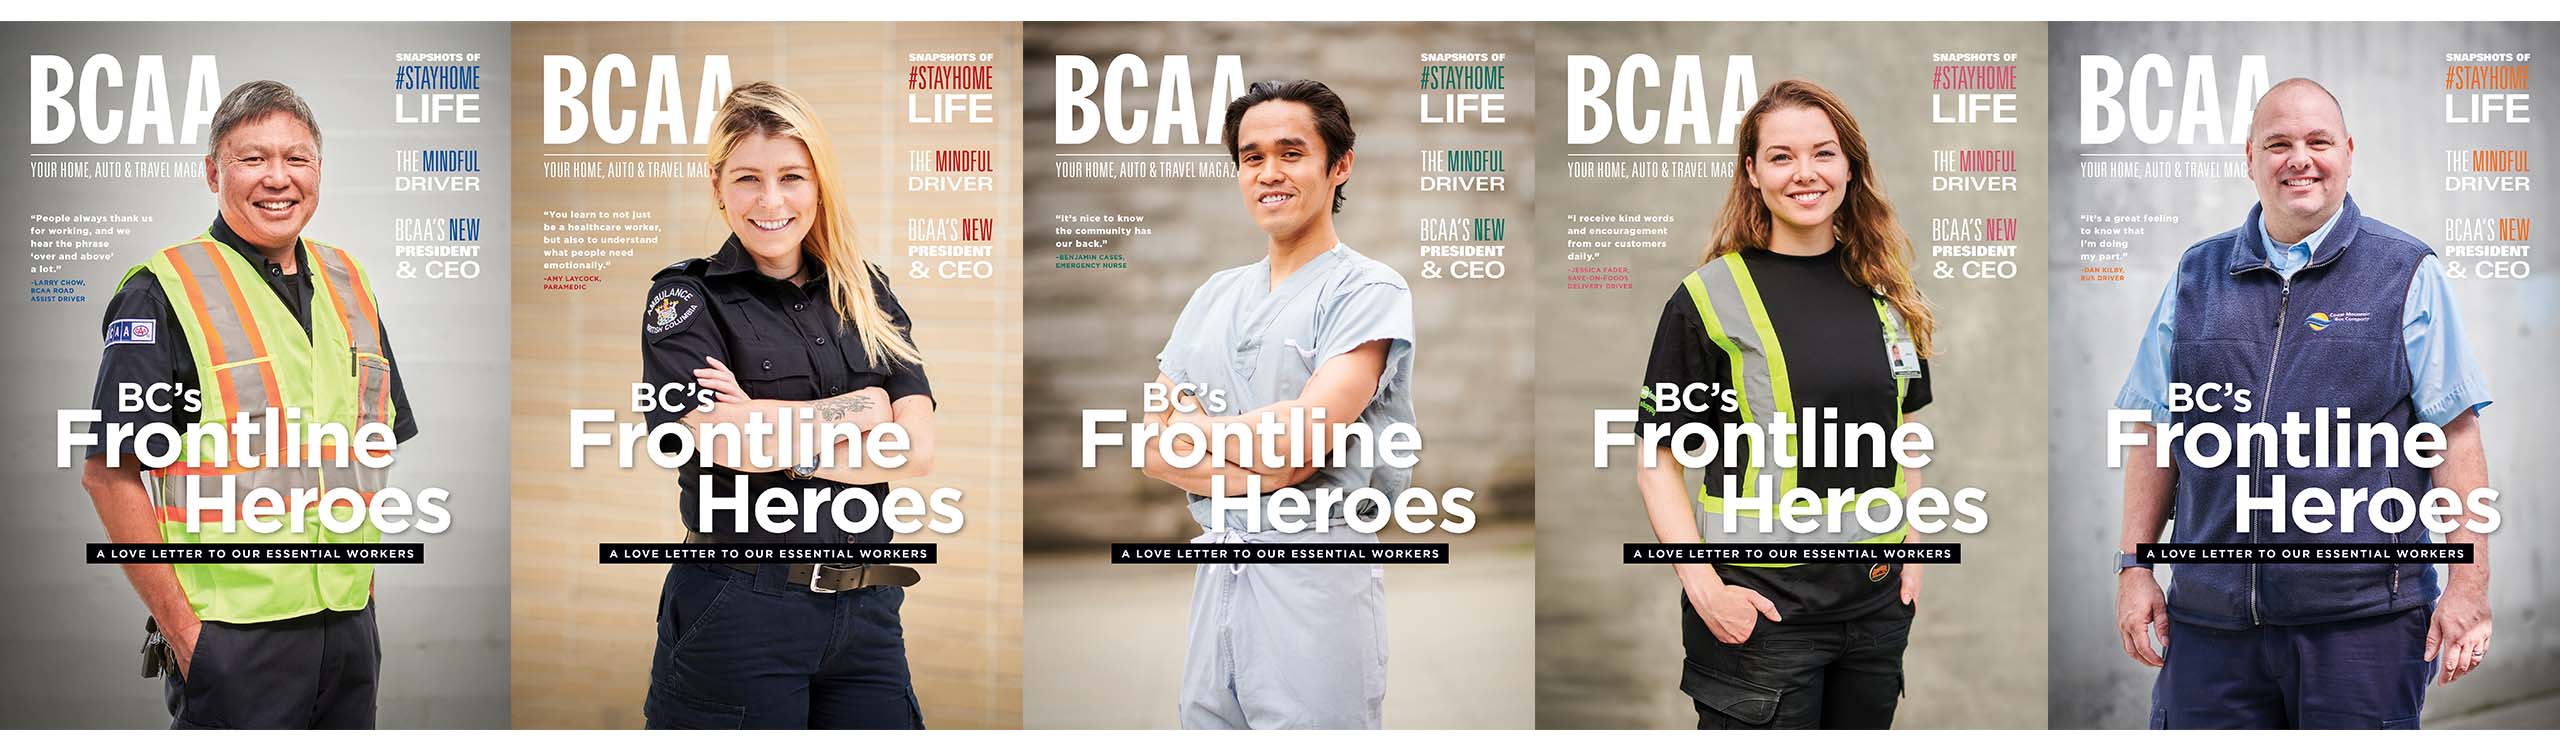 5 BCAA Magazine Covers